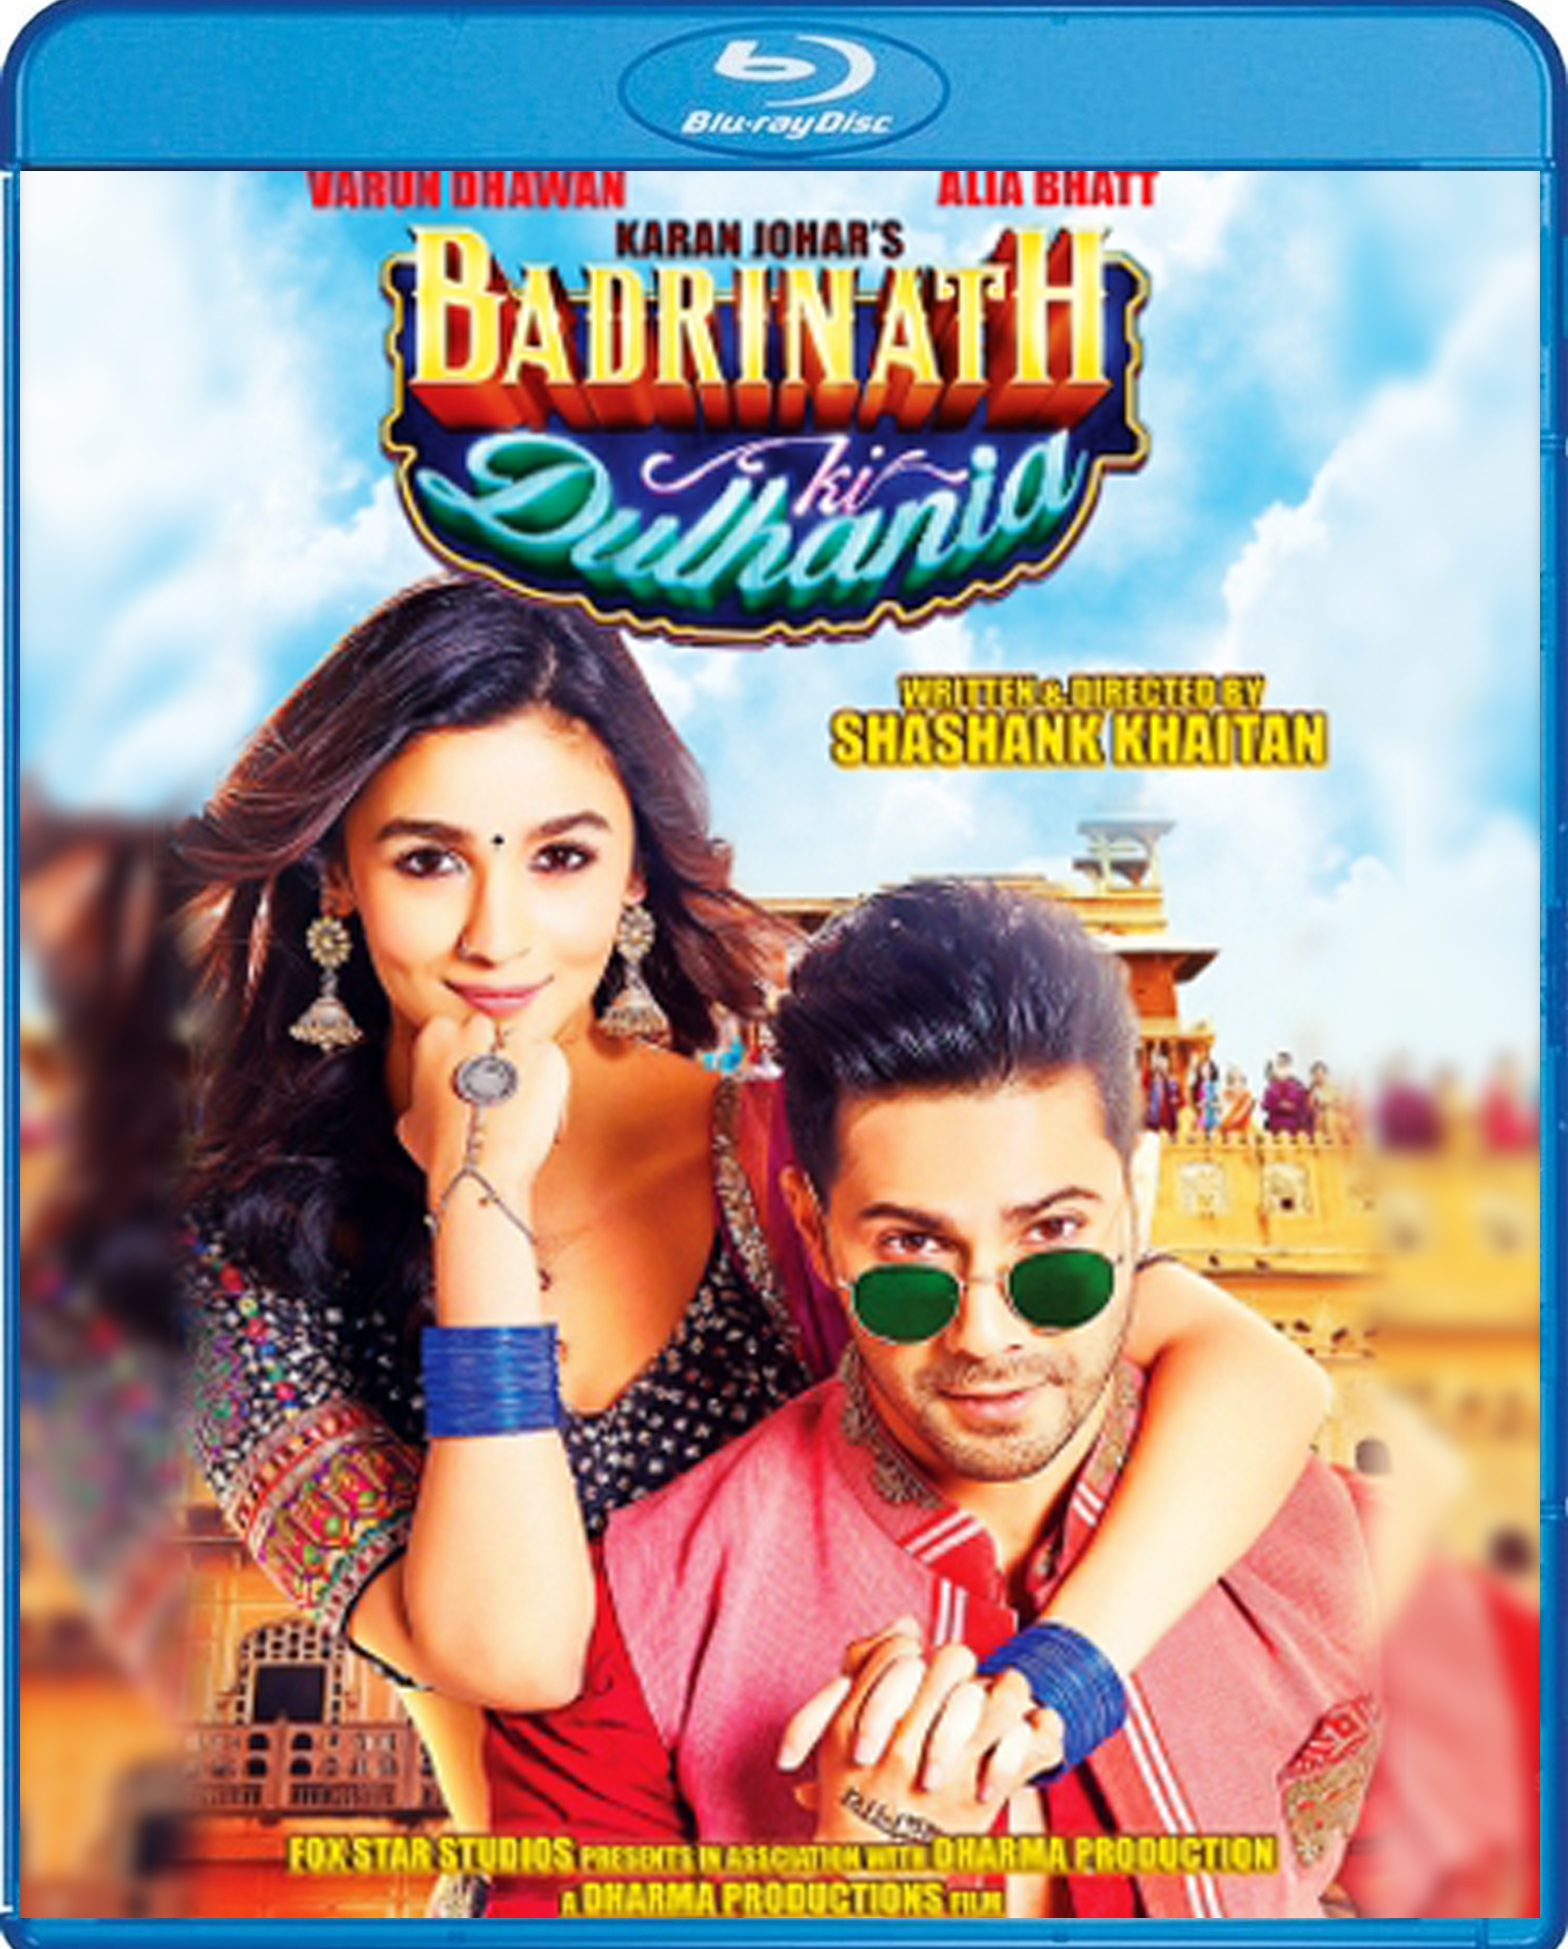 Badrinath Ki Dulhania 1 Hd Movie Download In Hindi